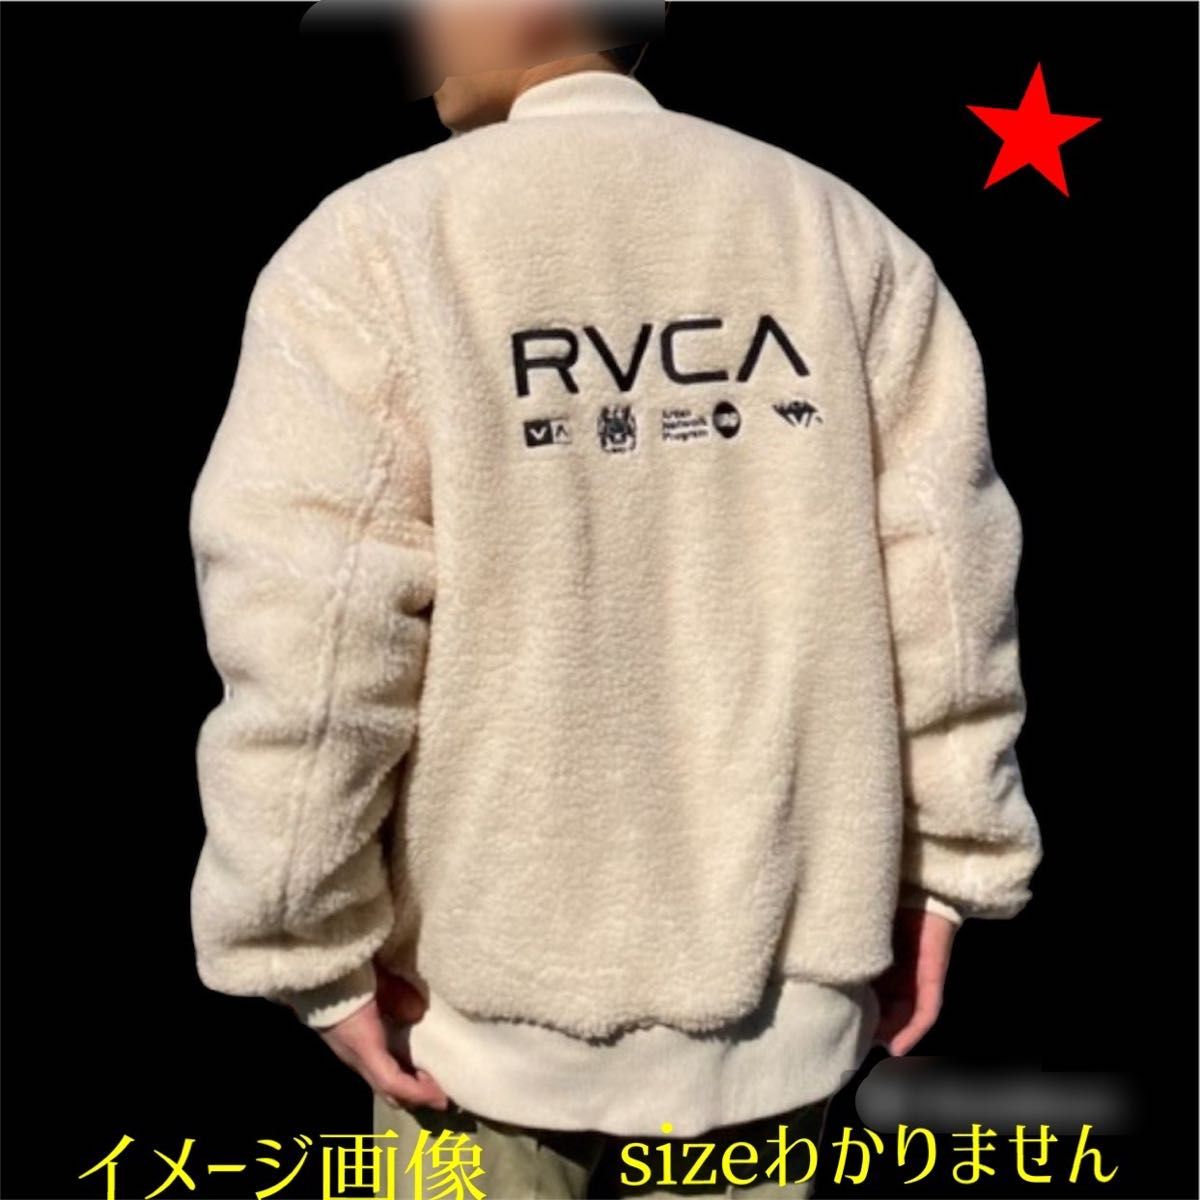 ★新品RVCA HOTH ・TYPEMA-1 JACKET